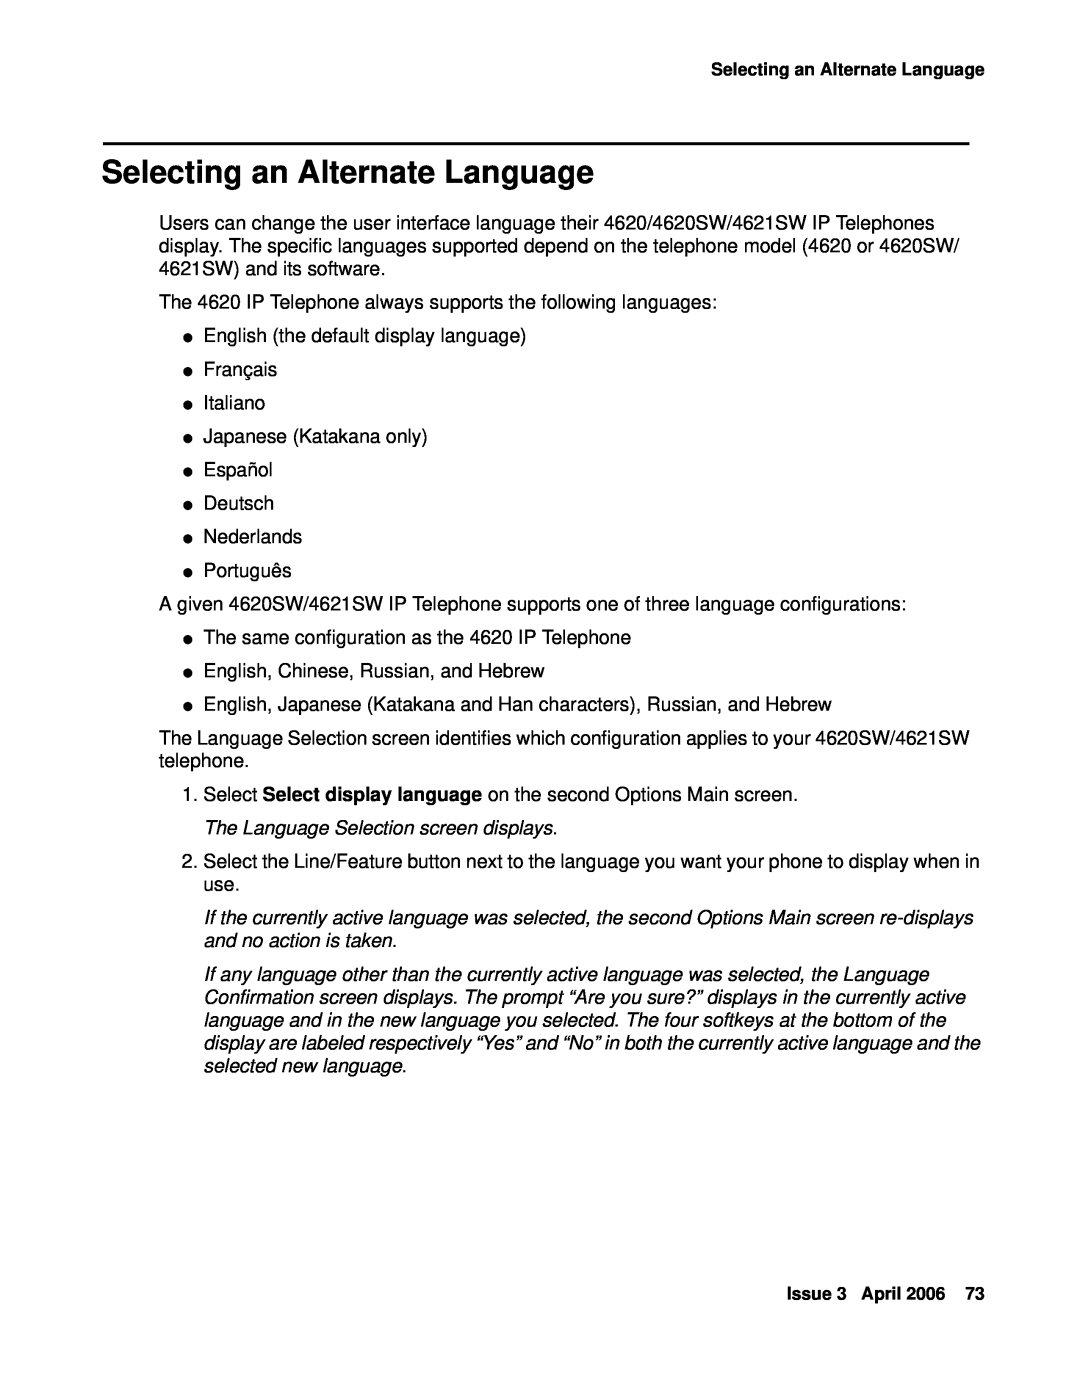 Avaya 4620SW, 4621SW manual Selecting an Alternate Language 